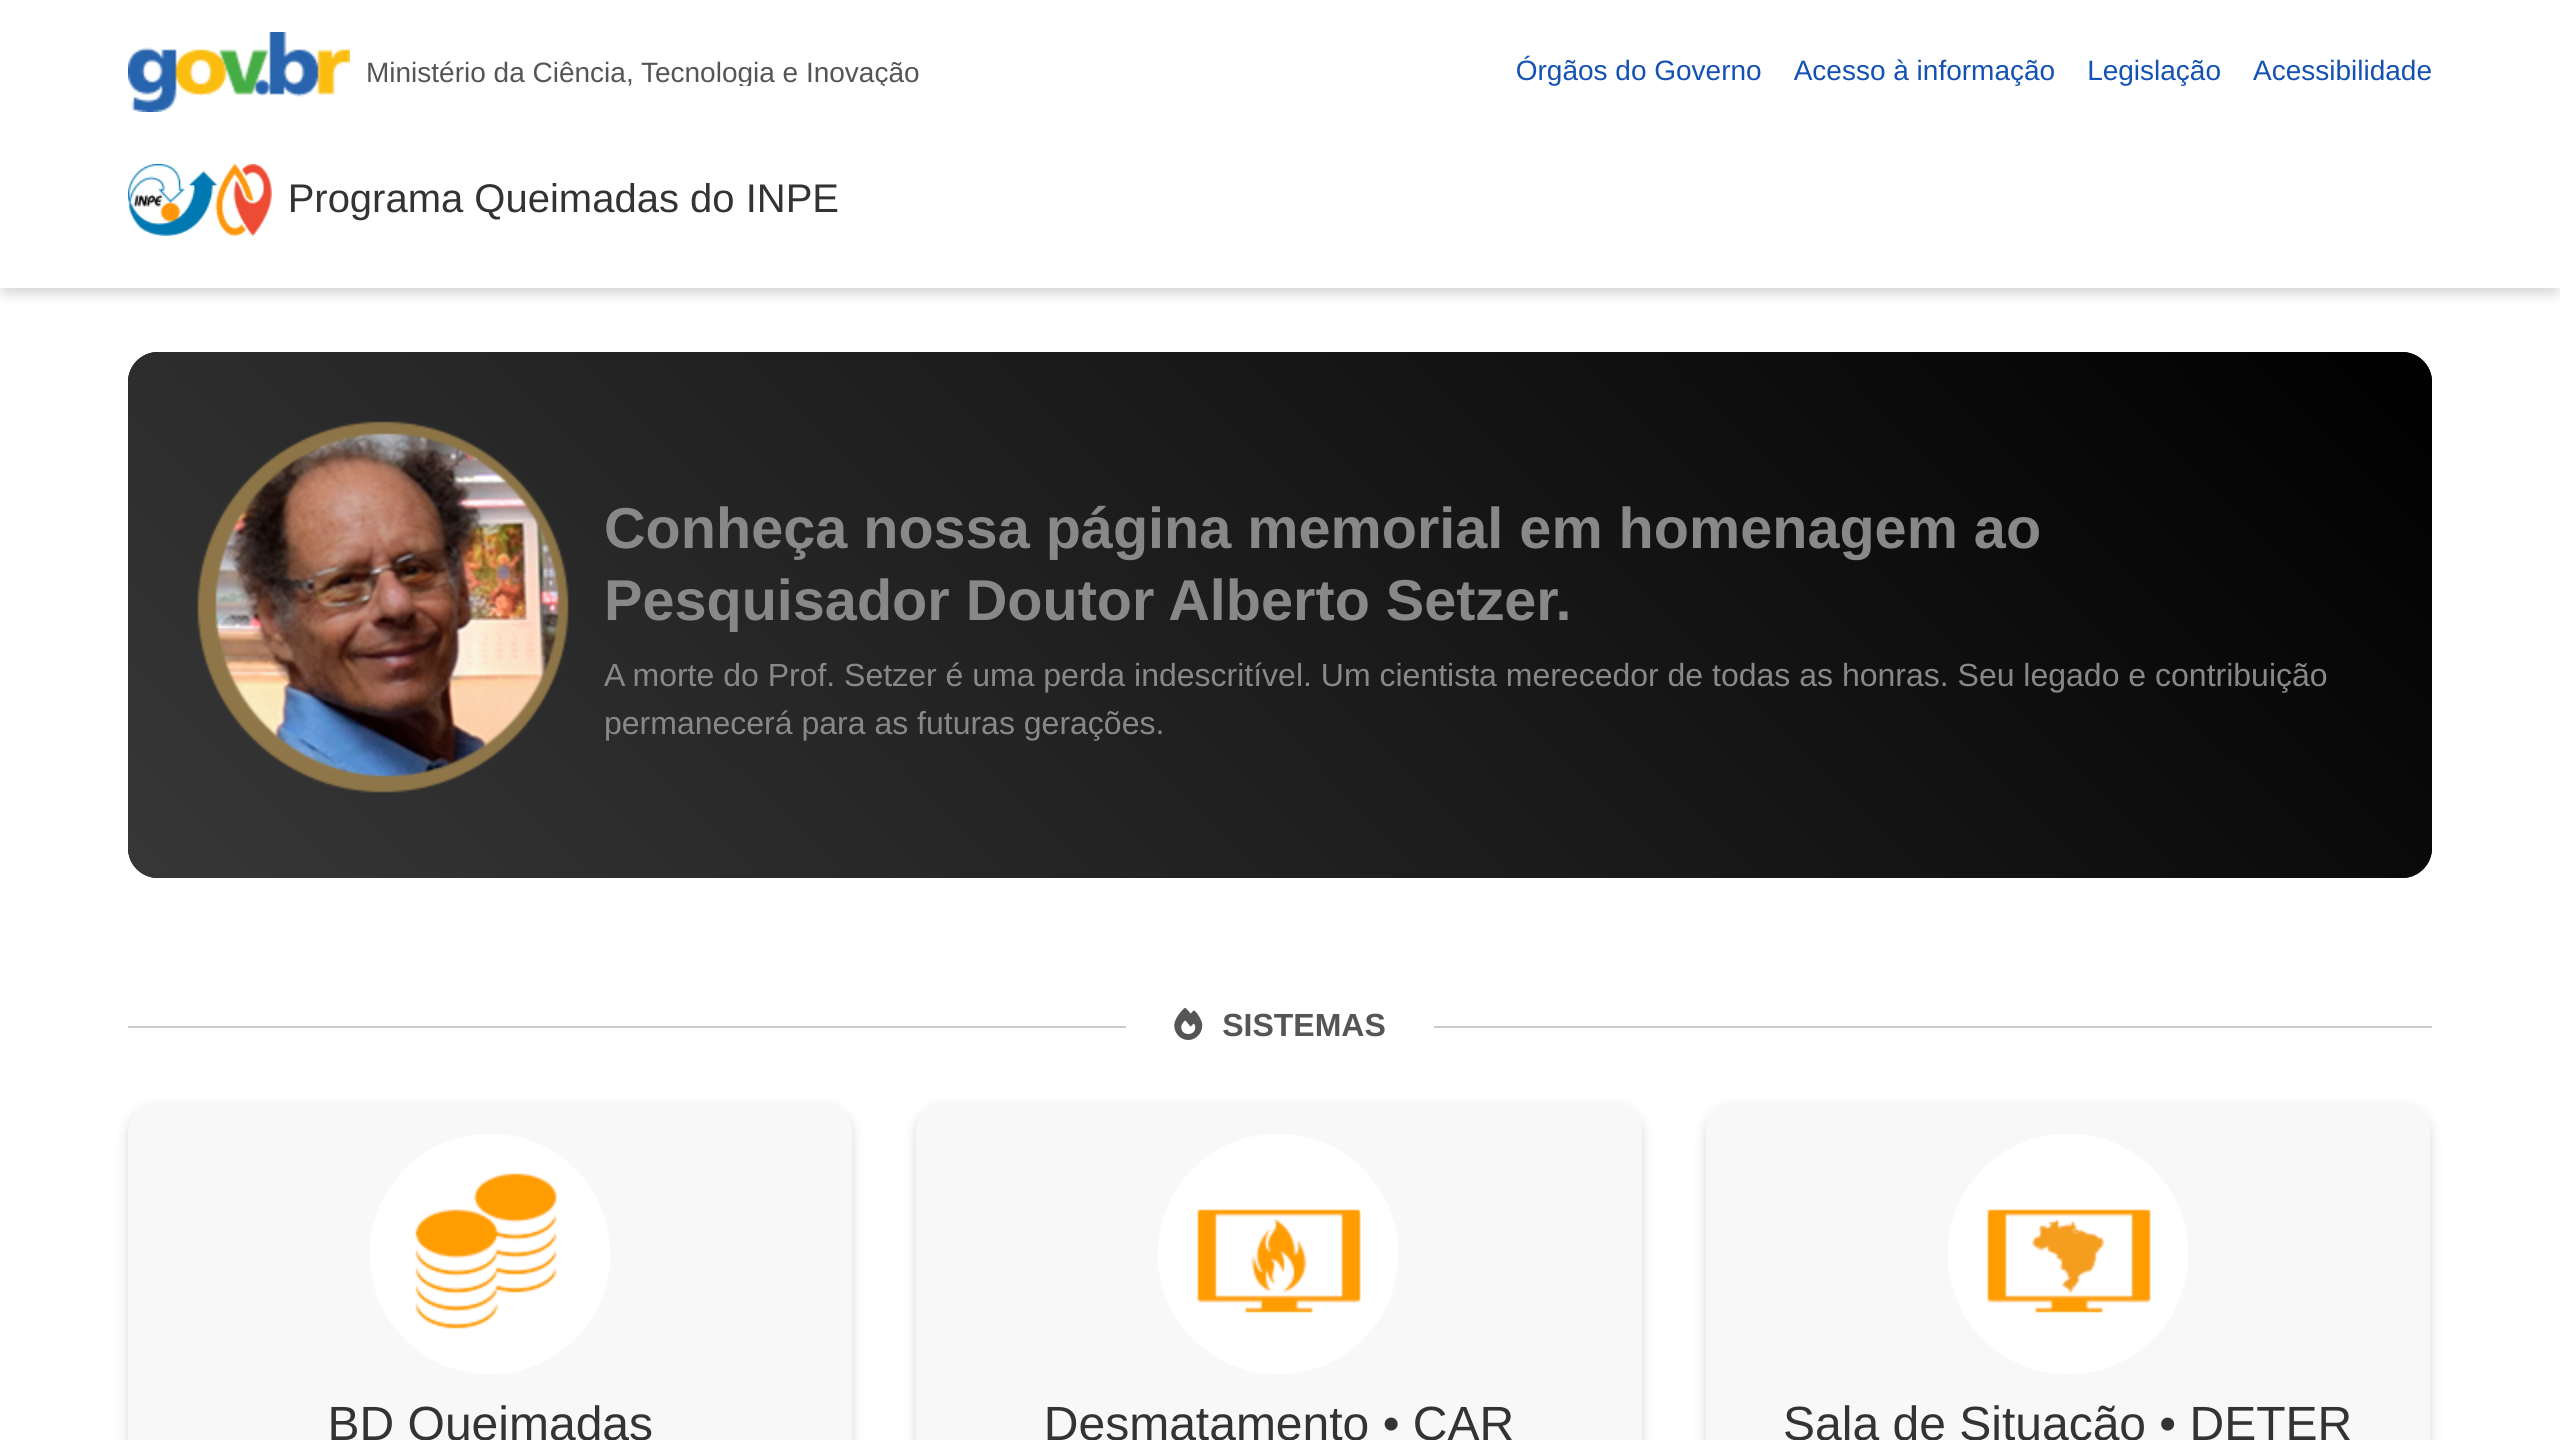 Queimadas INPE's website screenshot